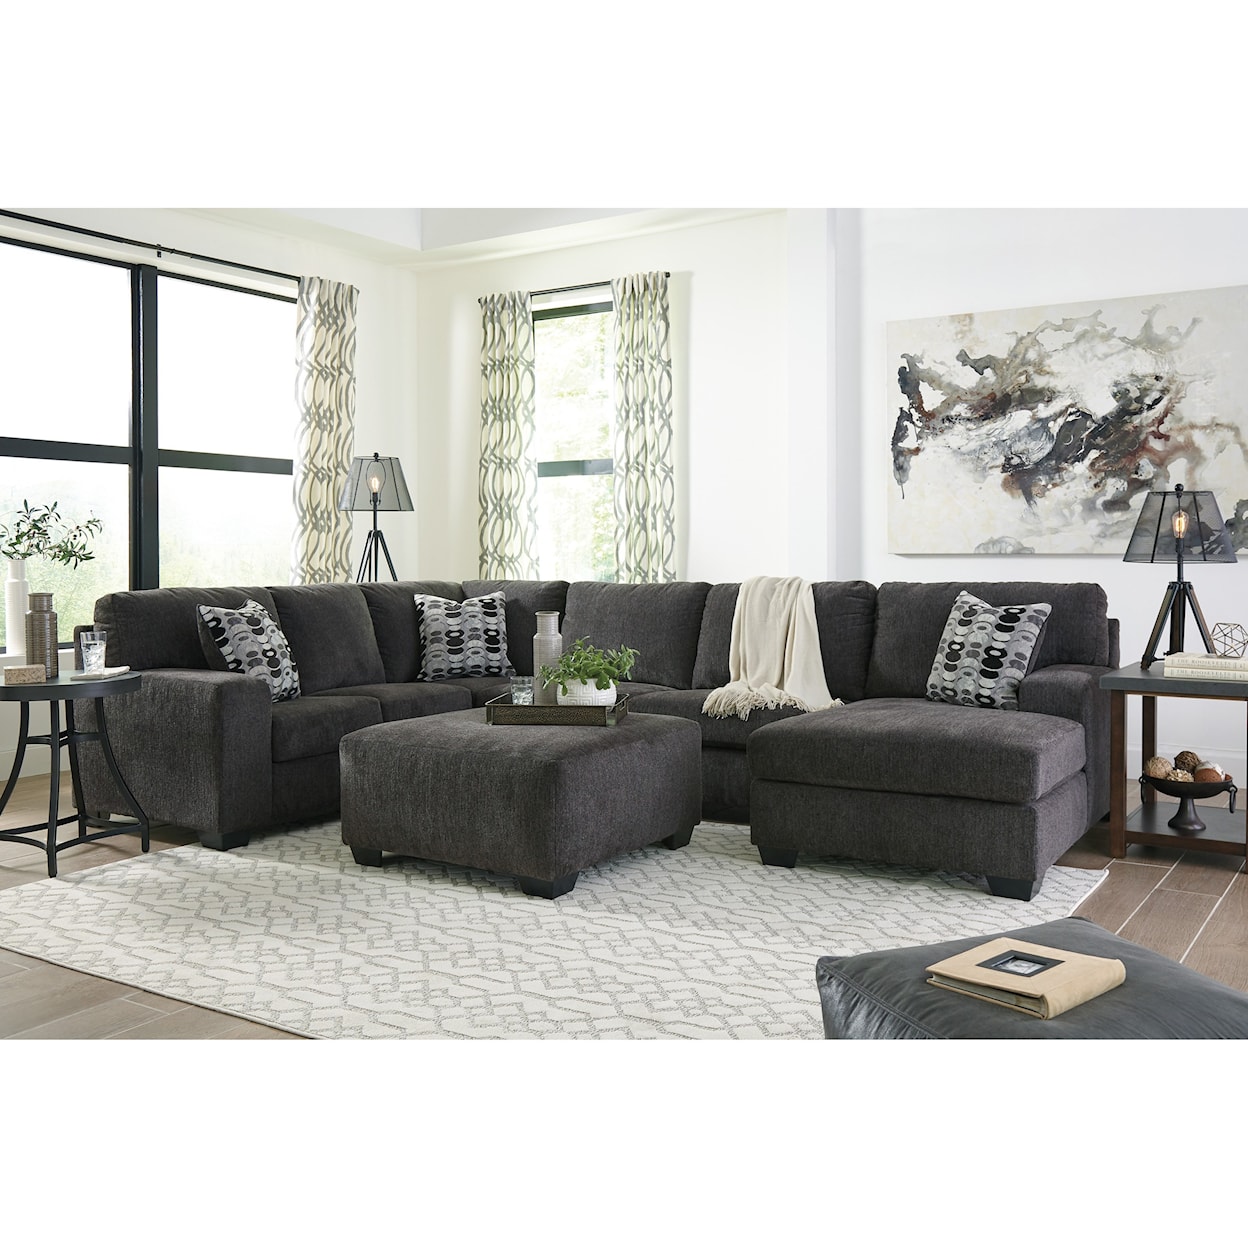 Ashley Furniture Signature Design Ballinasloe Stationary Living Room Group